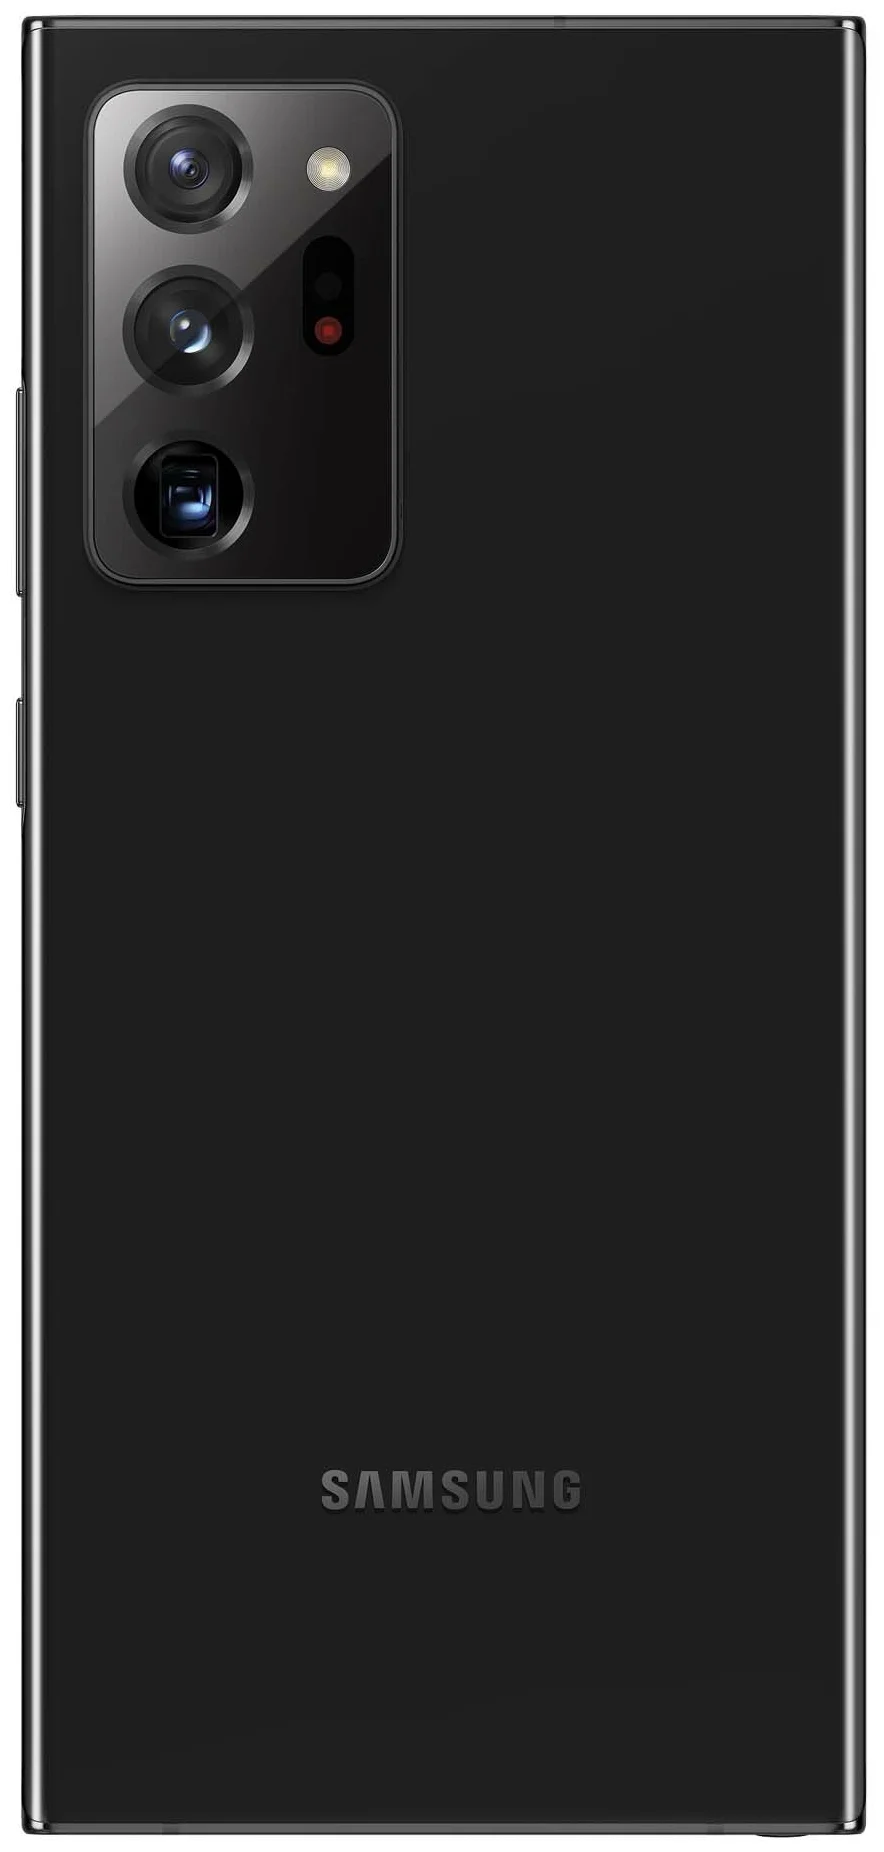 Samsung Galaxy Note 20 Ultra (SM-N985F) - интернет: 4G LTE